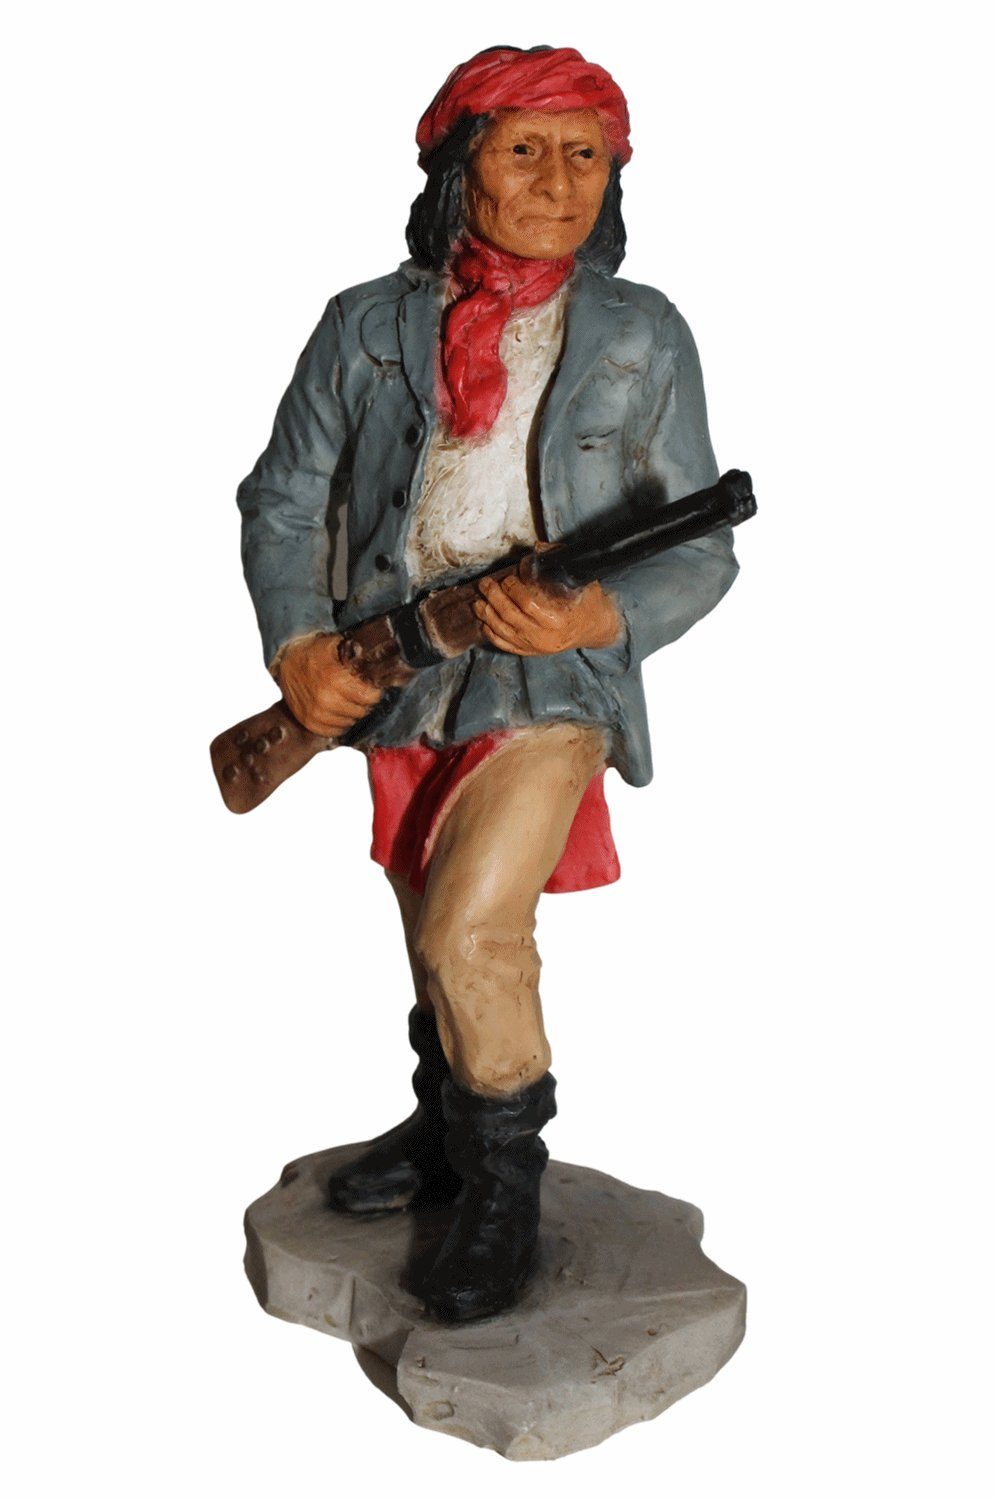 Deko cm Kriegshäuptling American Native Figur 15 Castagna H Geronimo Dekofigur